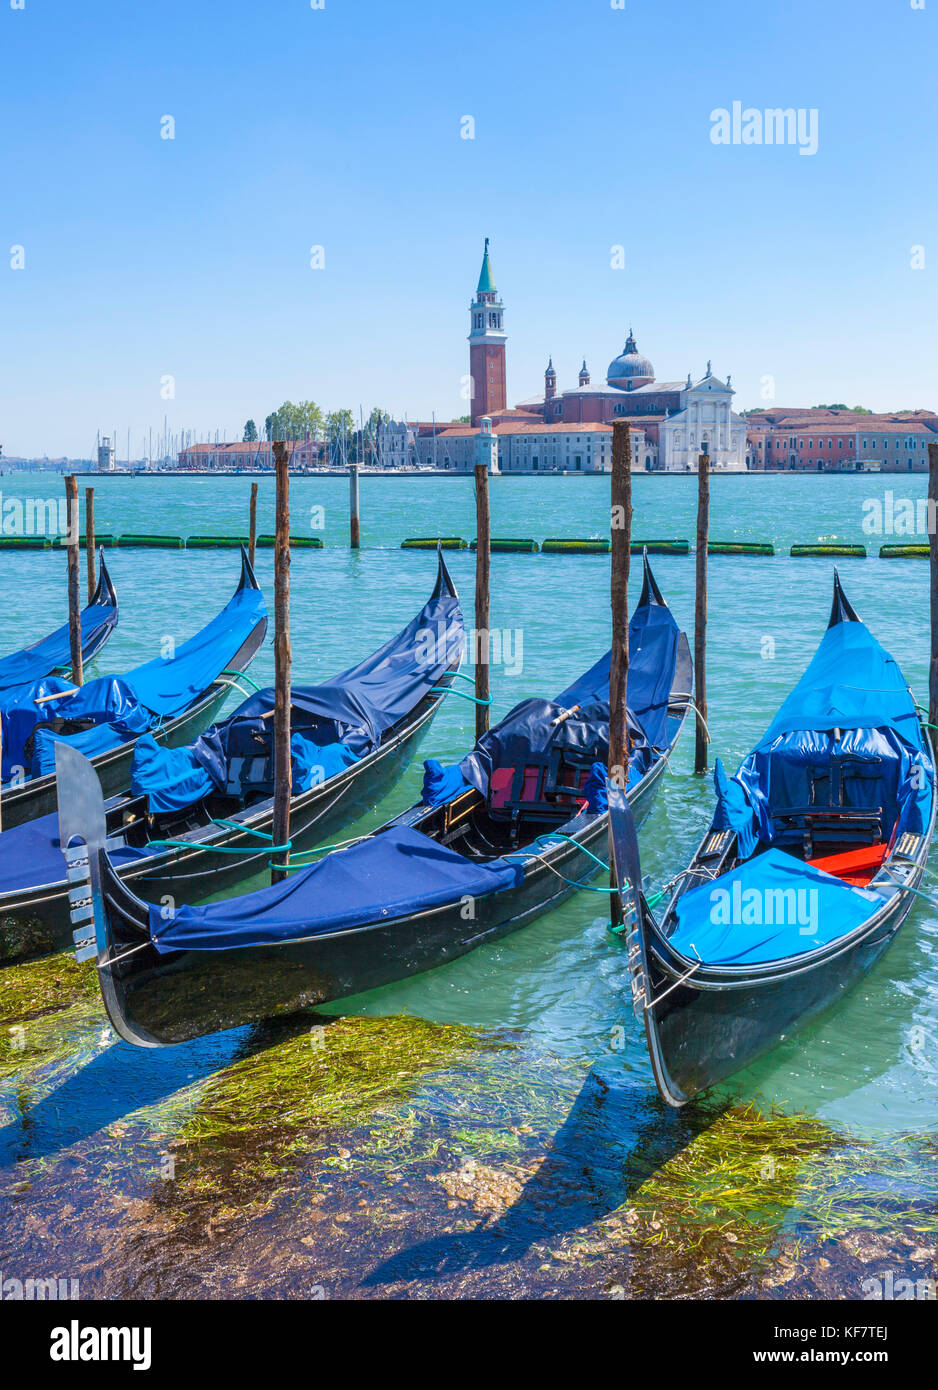 Italia Venecia Italia góndolas en el Gran Canal Venecia frente a la isla de San Giorgio Maggiore, Venecia Italia ue europa Foto de stock